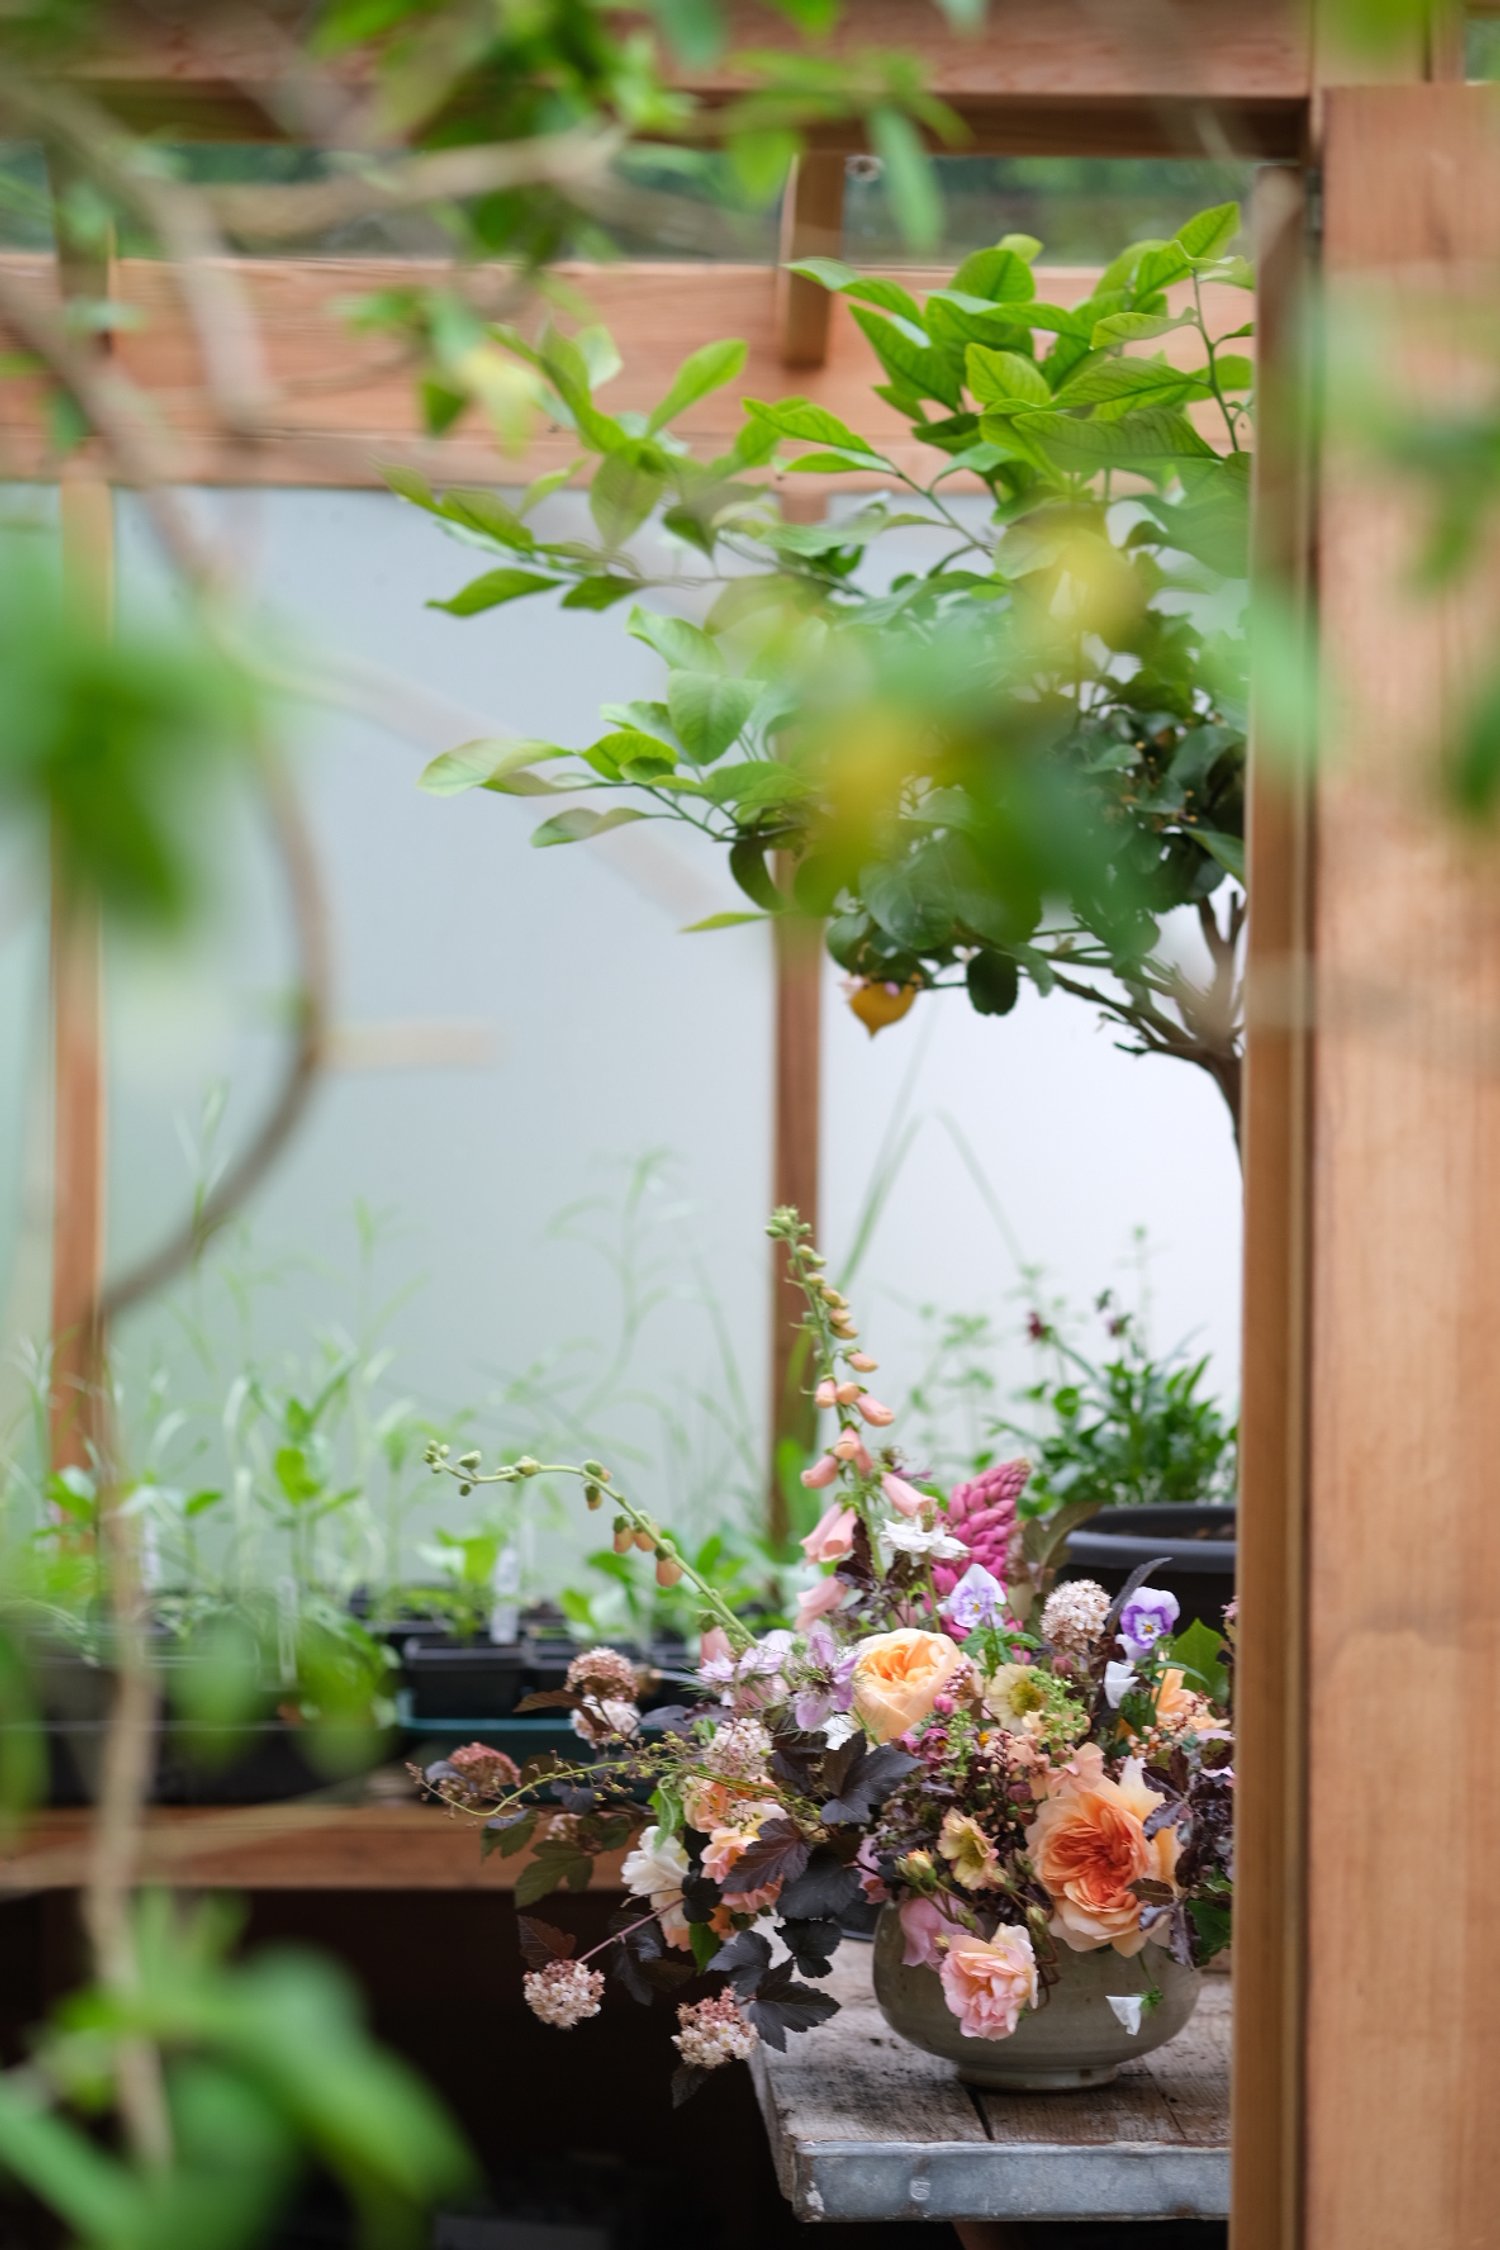 Cedar greenhouse for growing wedding flowers